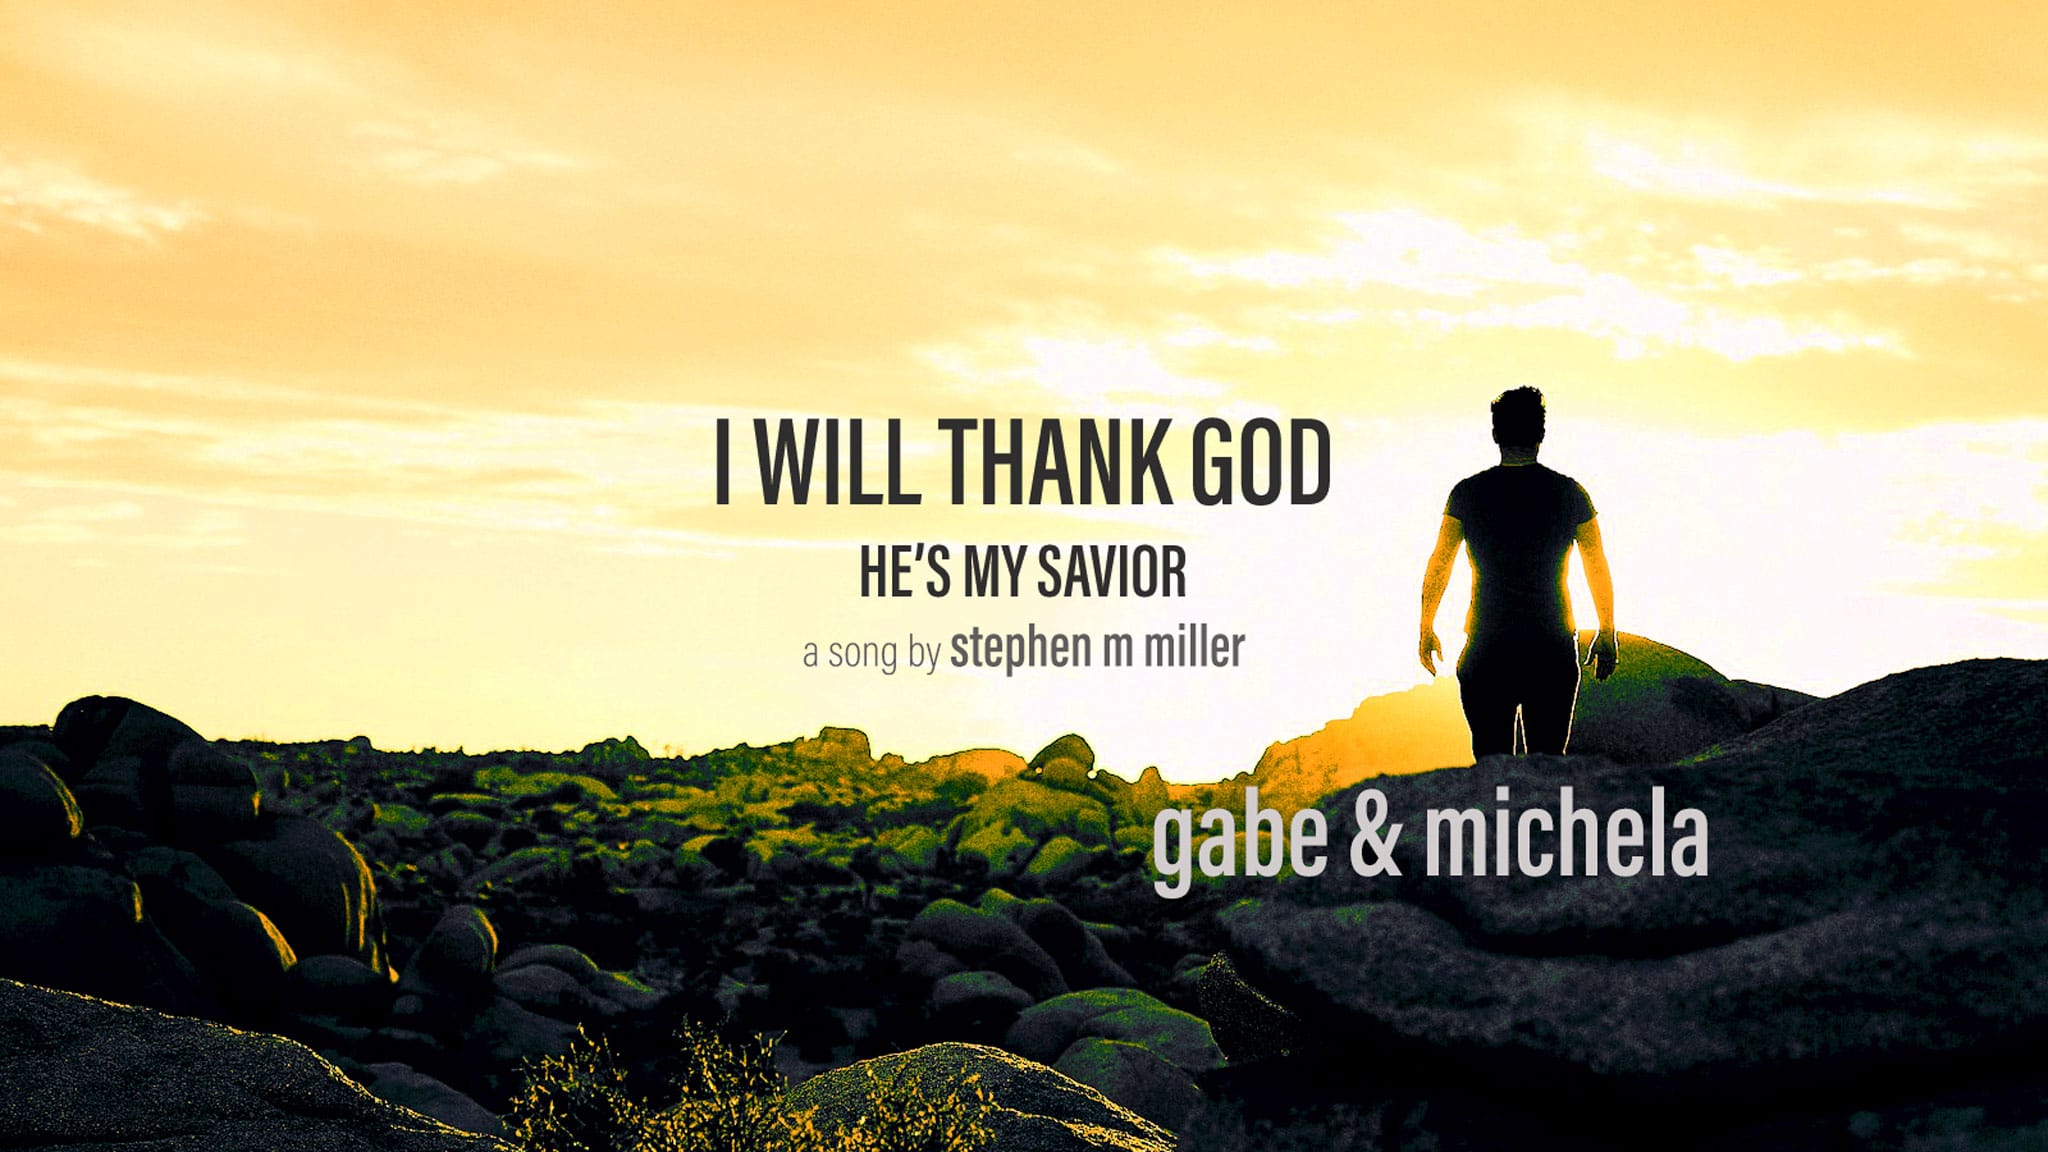 video: Video: I will thank God he’s my Savior